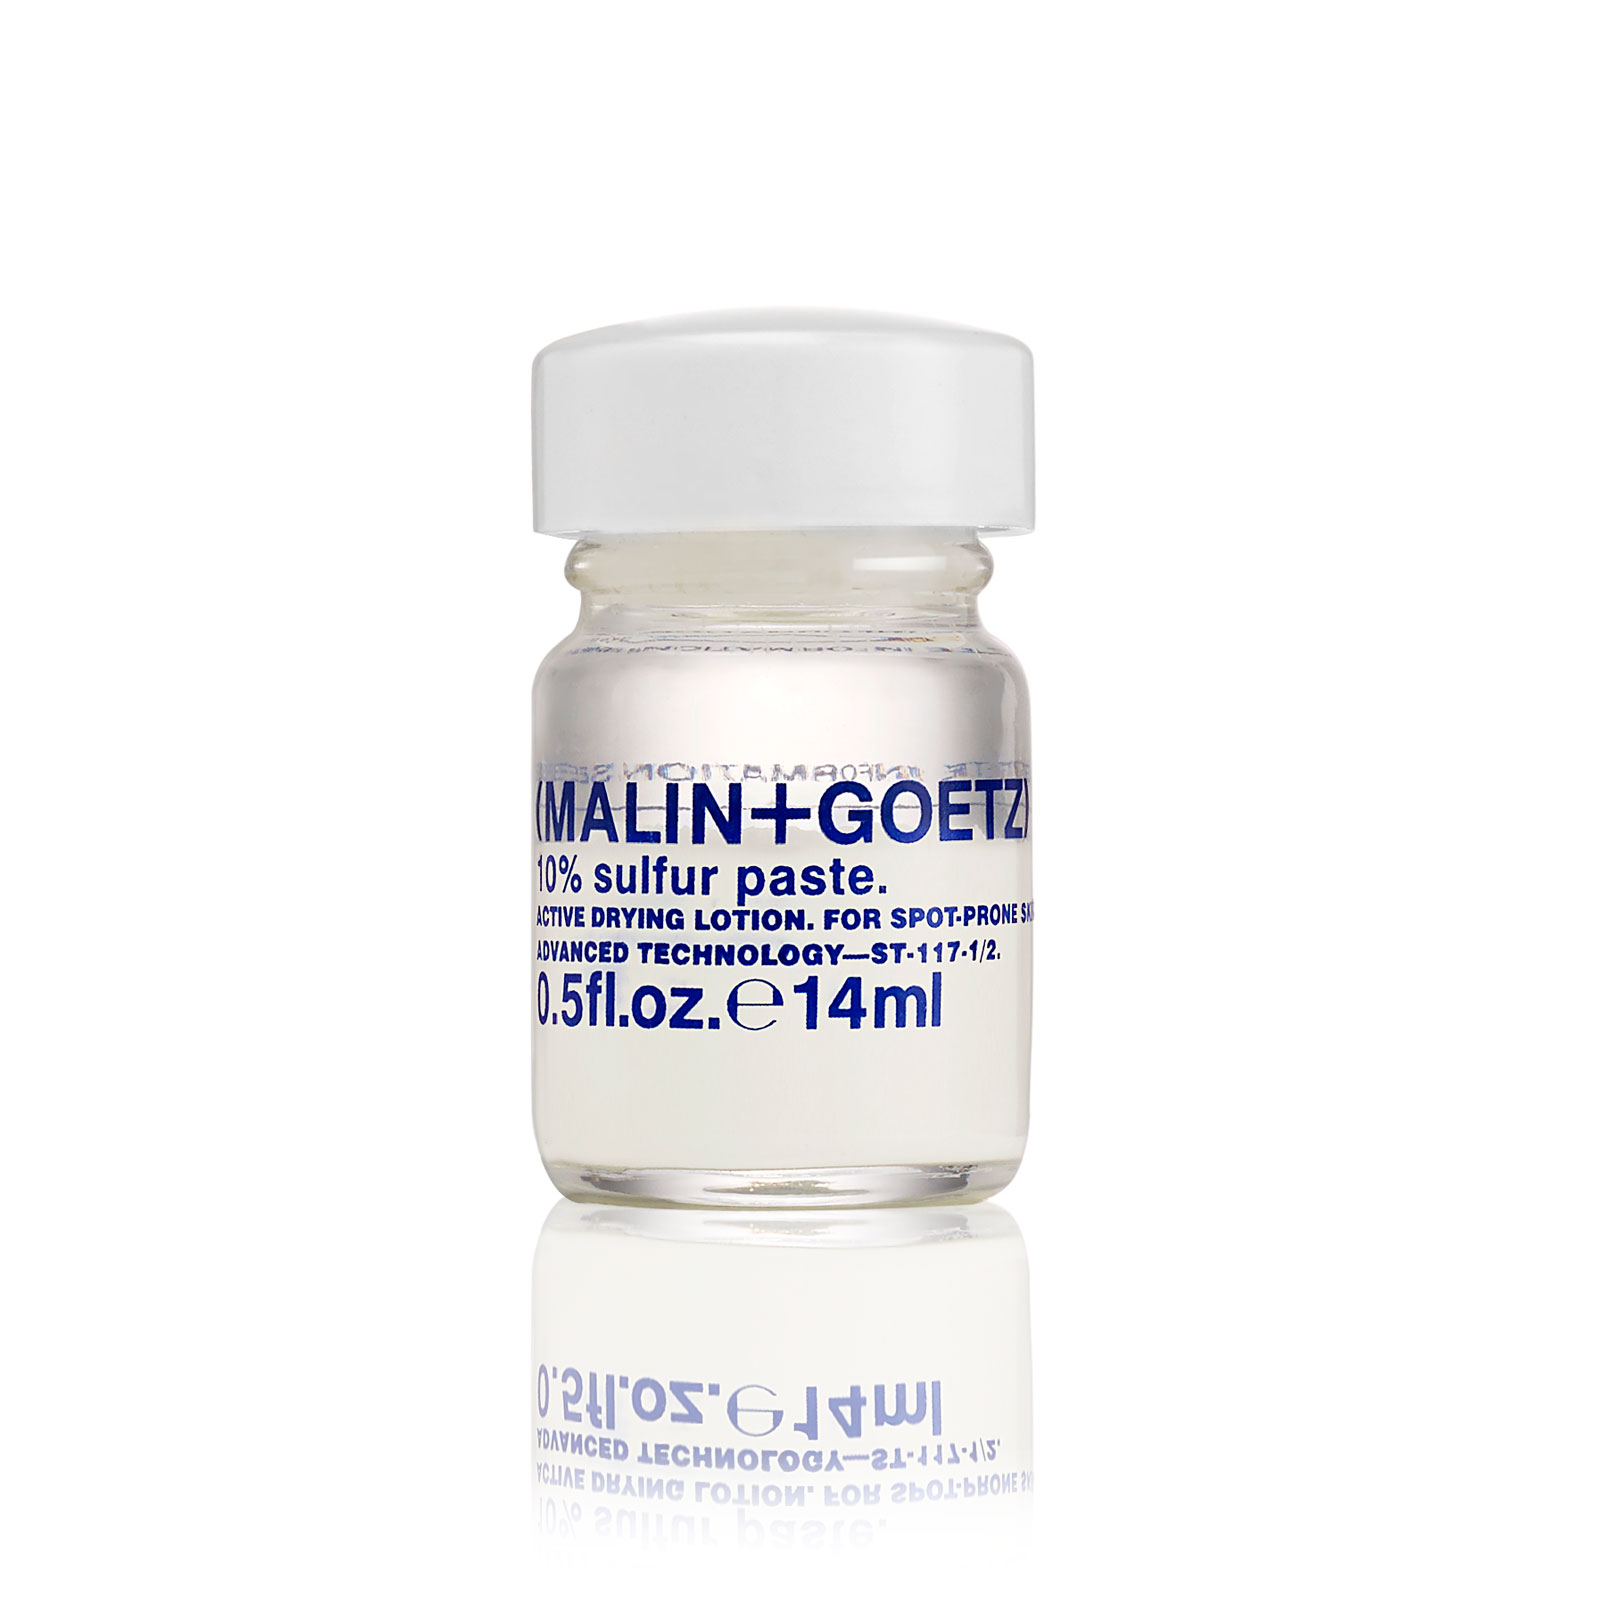 MALIN+GOETZ 10% Sulfur Paste